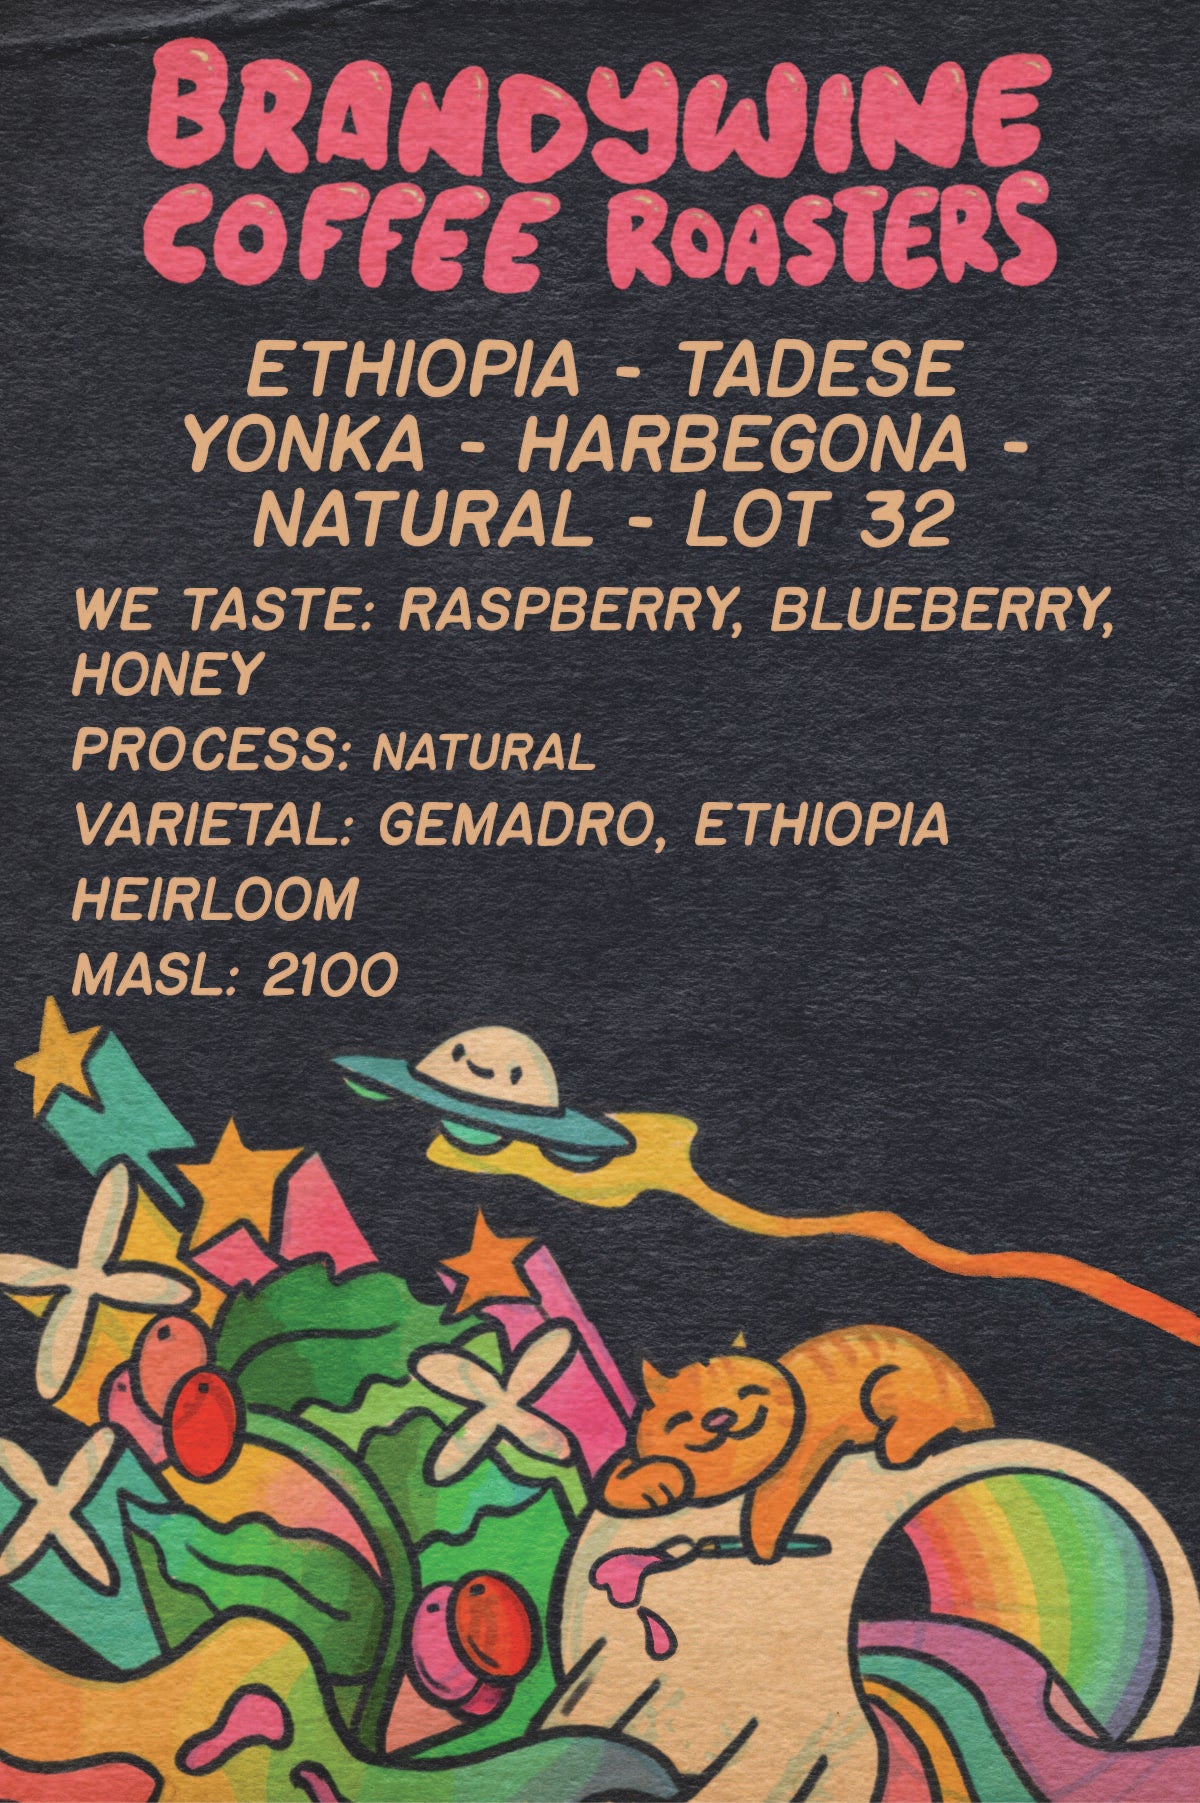 Ethiopia - Tadese Yonka - Harbegona - Natural - Lot 32